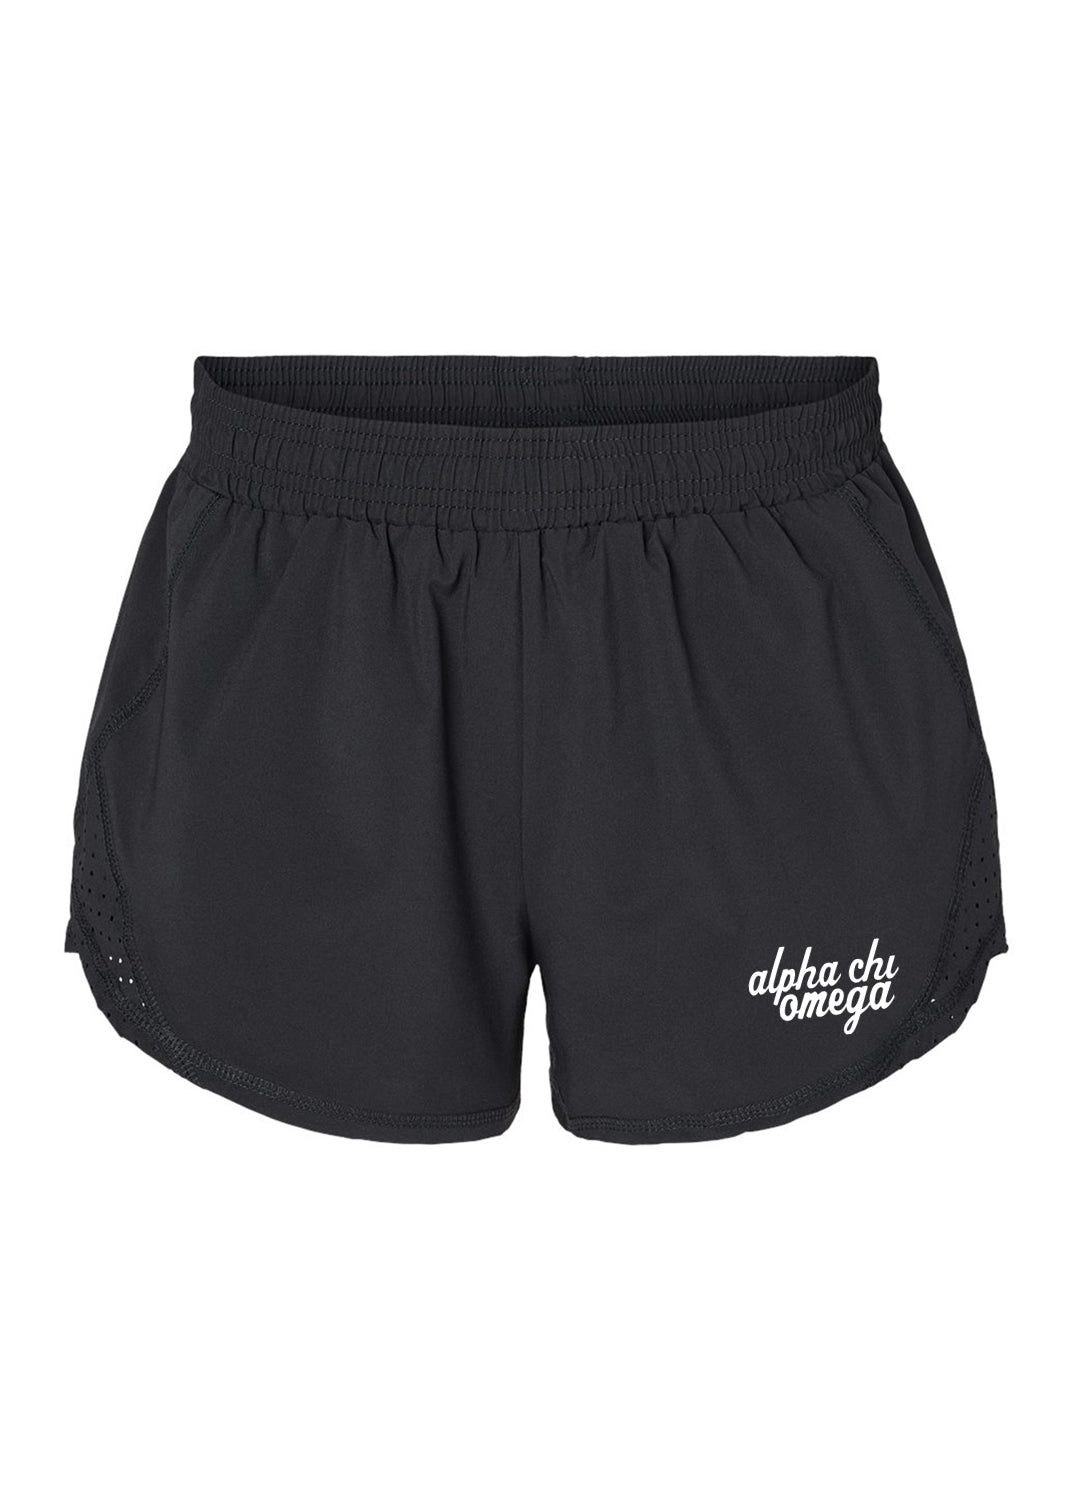 Alpha Chi Black Athletic Shorts